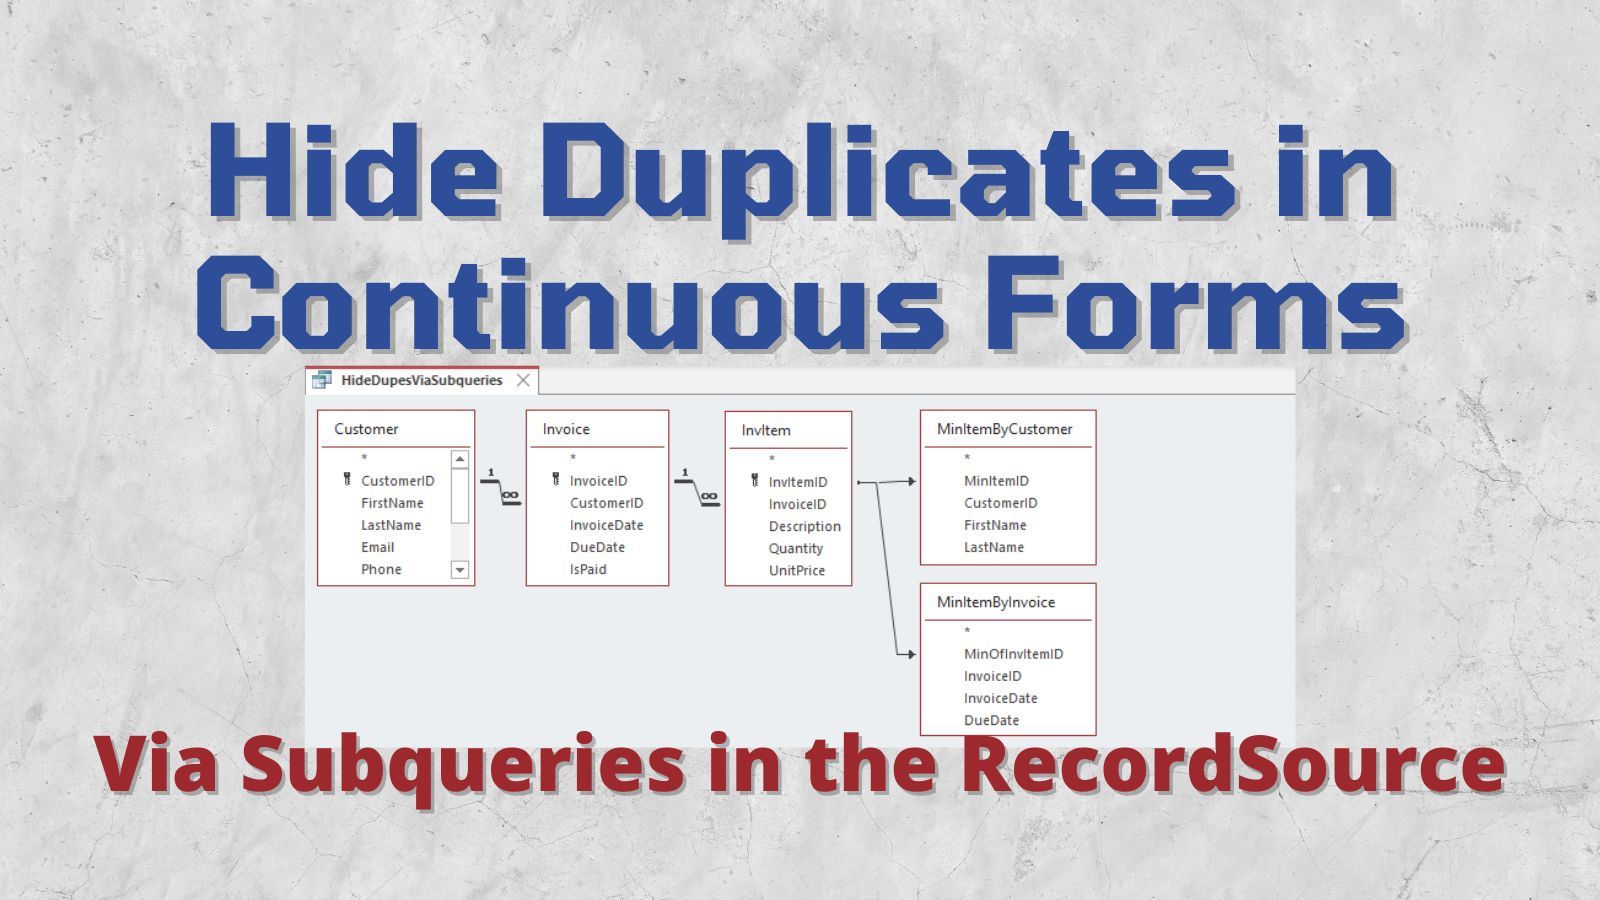 Hiding Duplicate Values in Continuous Forms via Subqueries